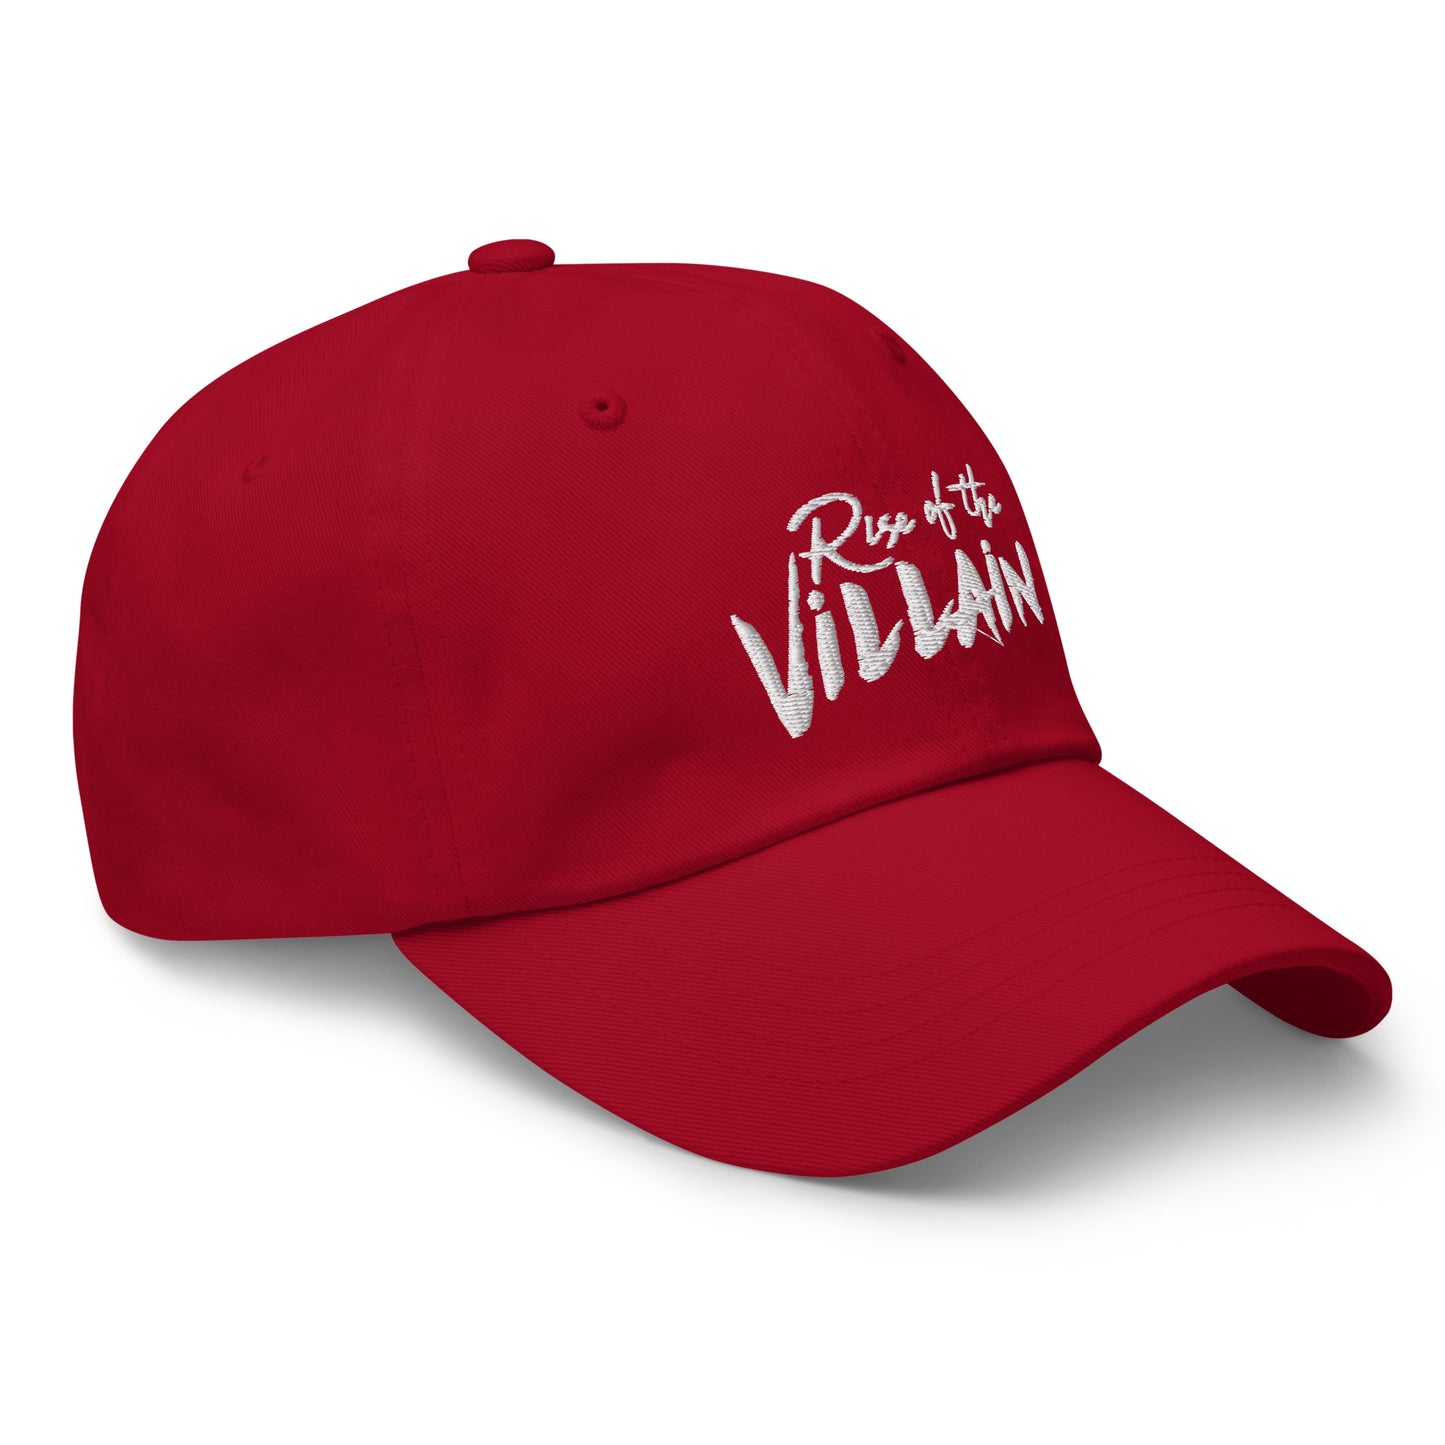 Rise of the Villain hat